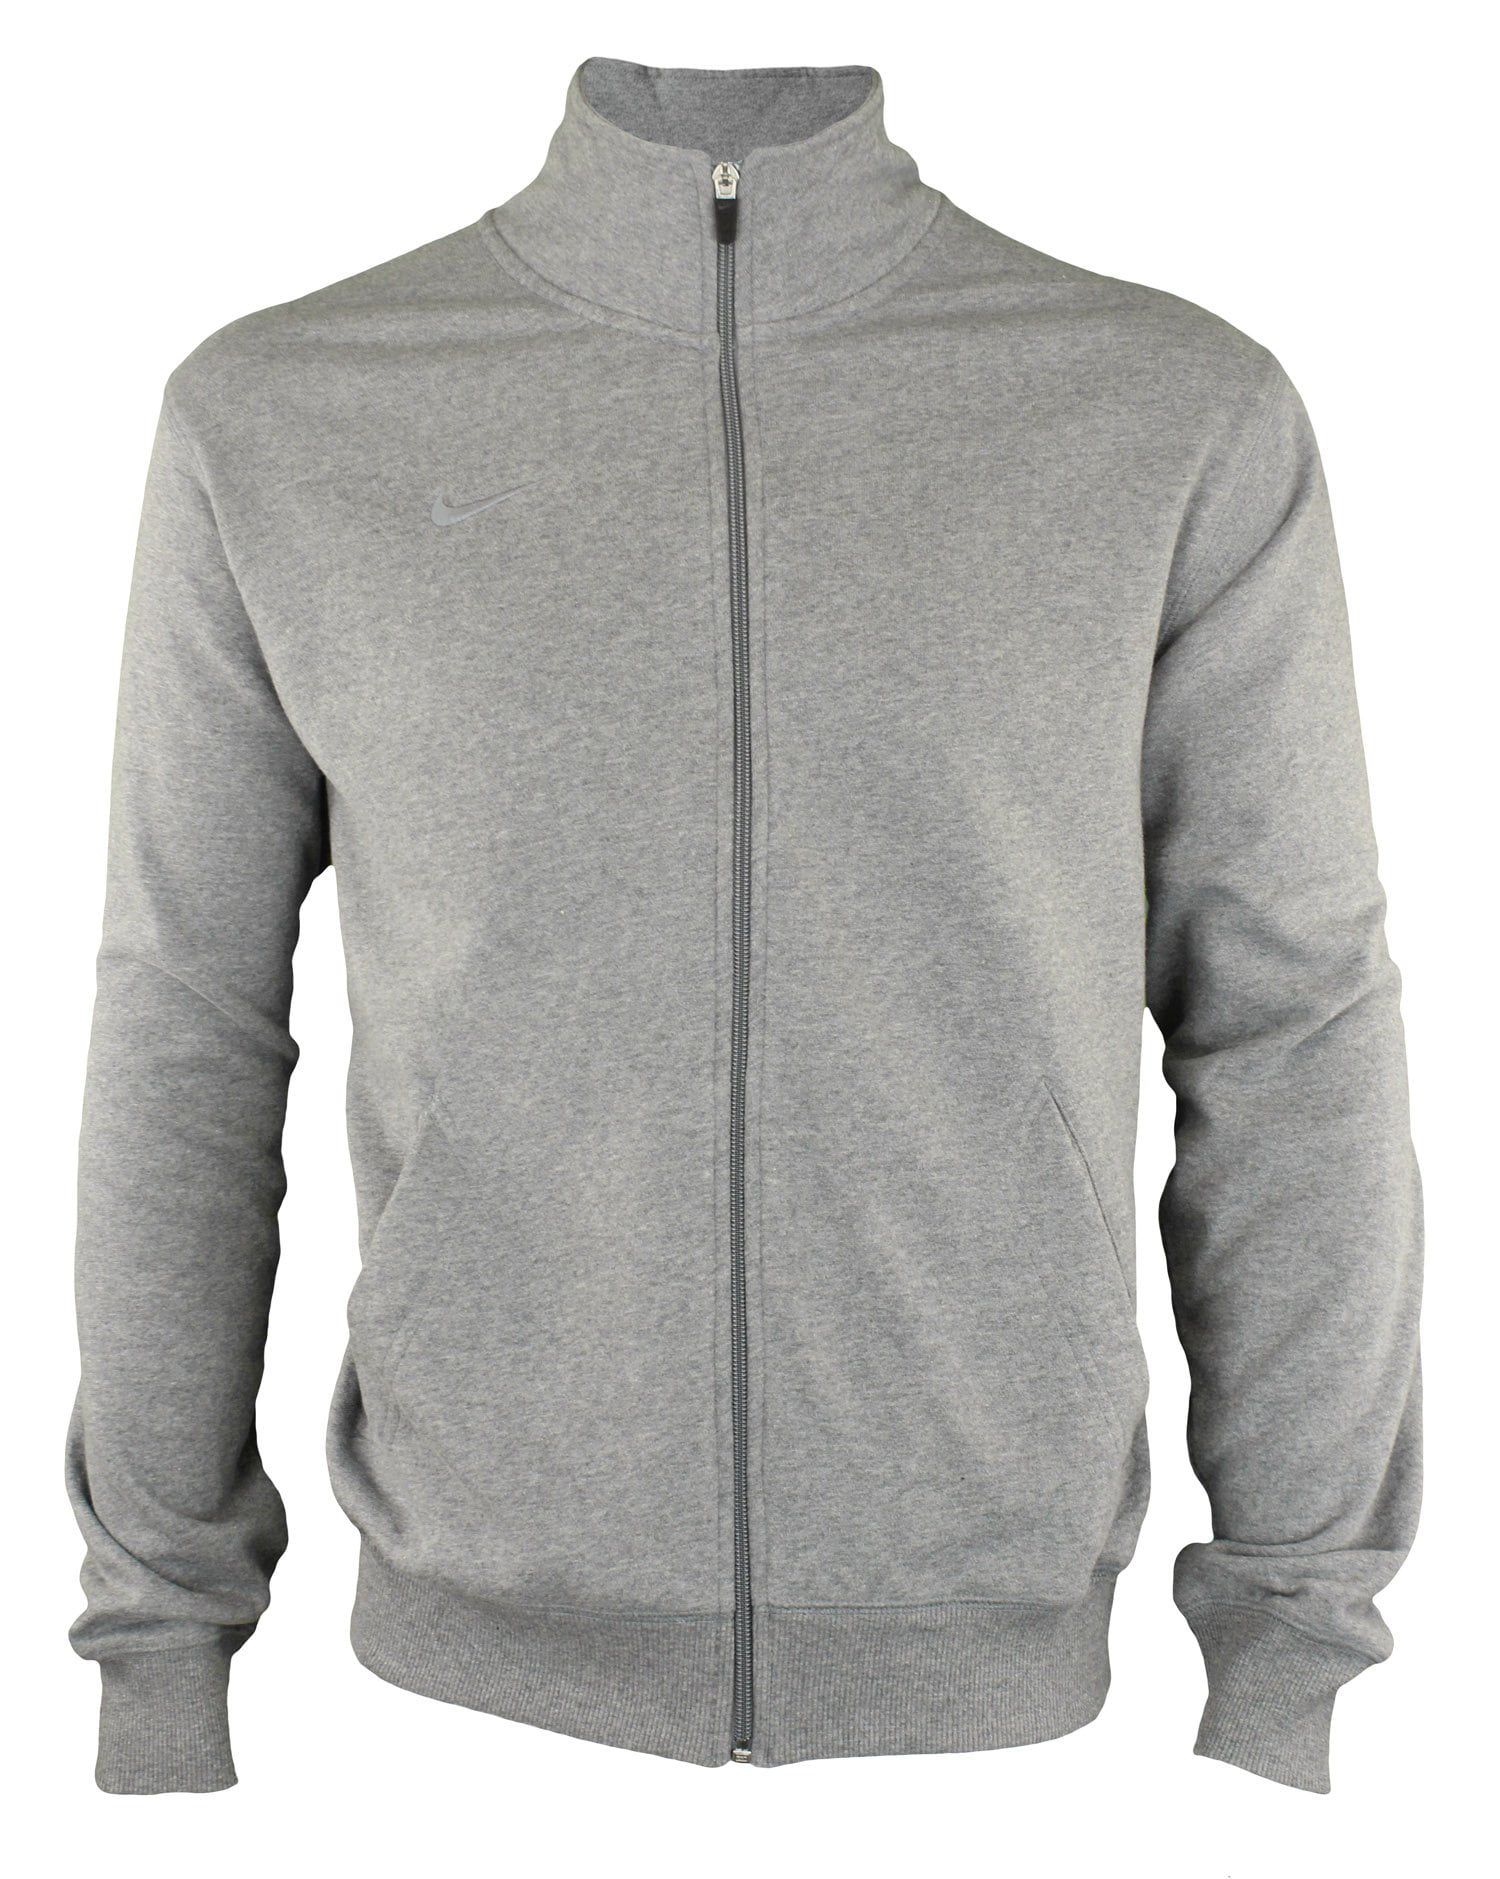 Nike Men's Mock Collar Fleece Jacket, Color Options - Walmart.com